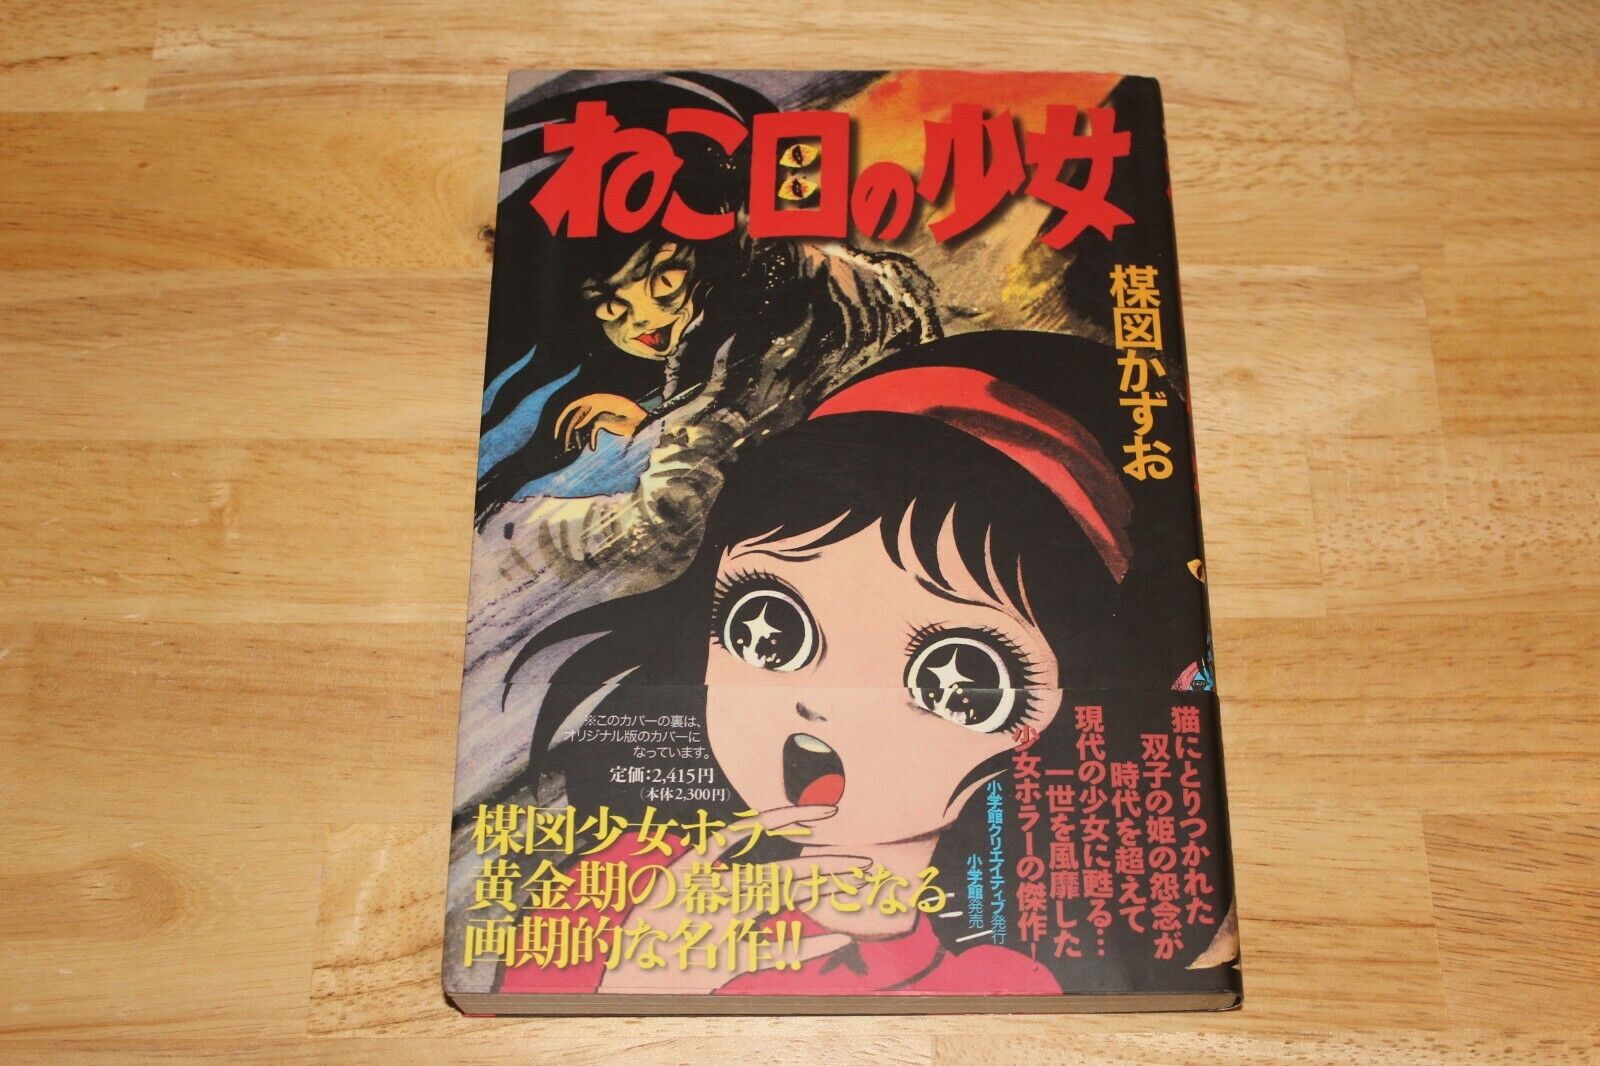 Nekome no Shoujo Manga. Japanese release.